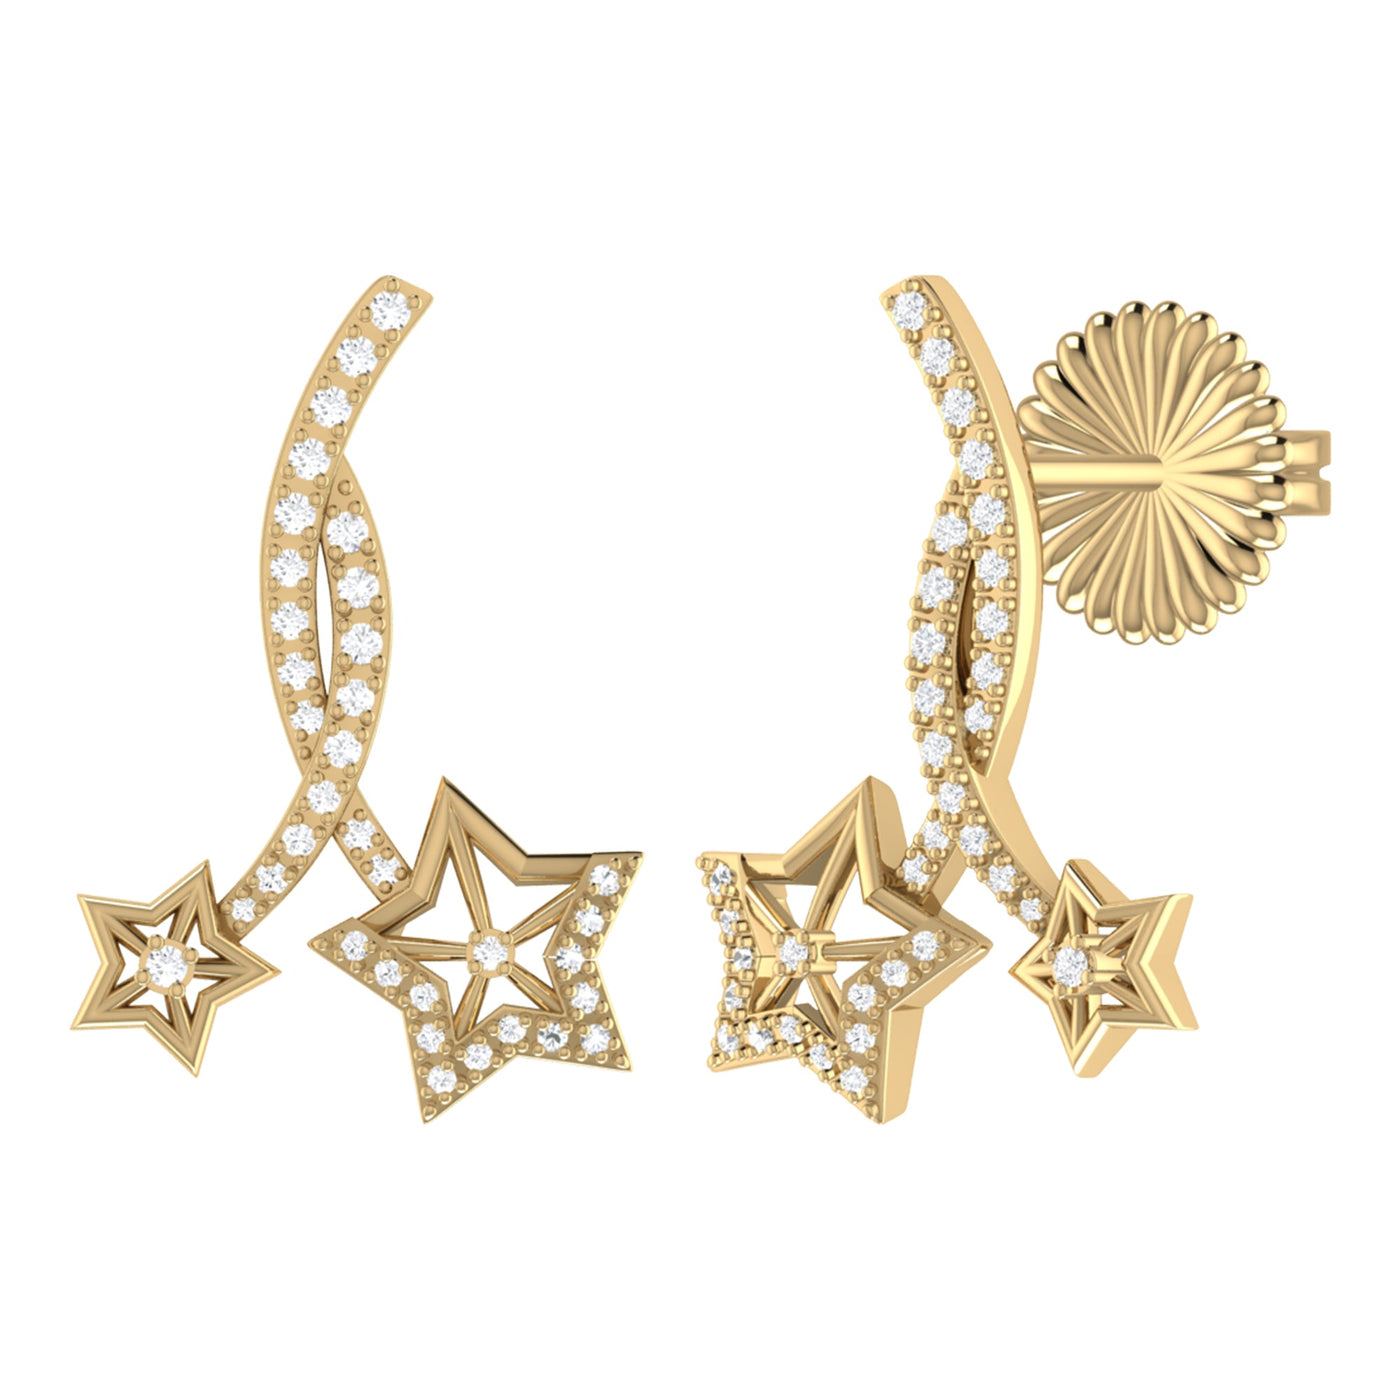 Stud earrings - Star Dance - 14 carat gold plated - diamonds